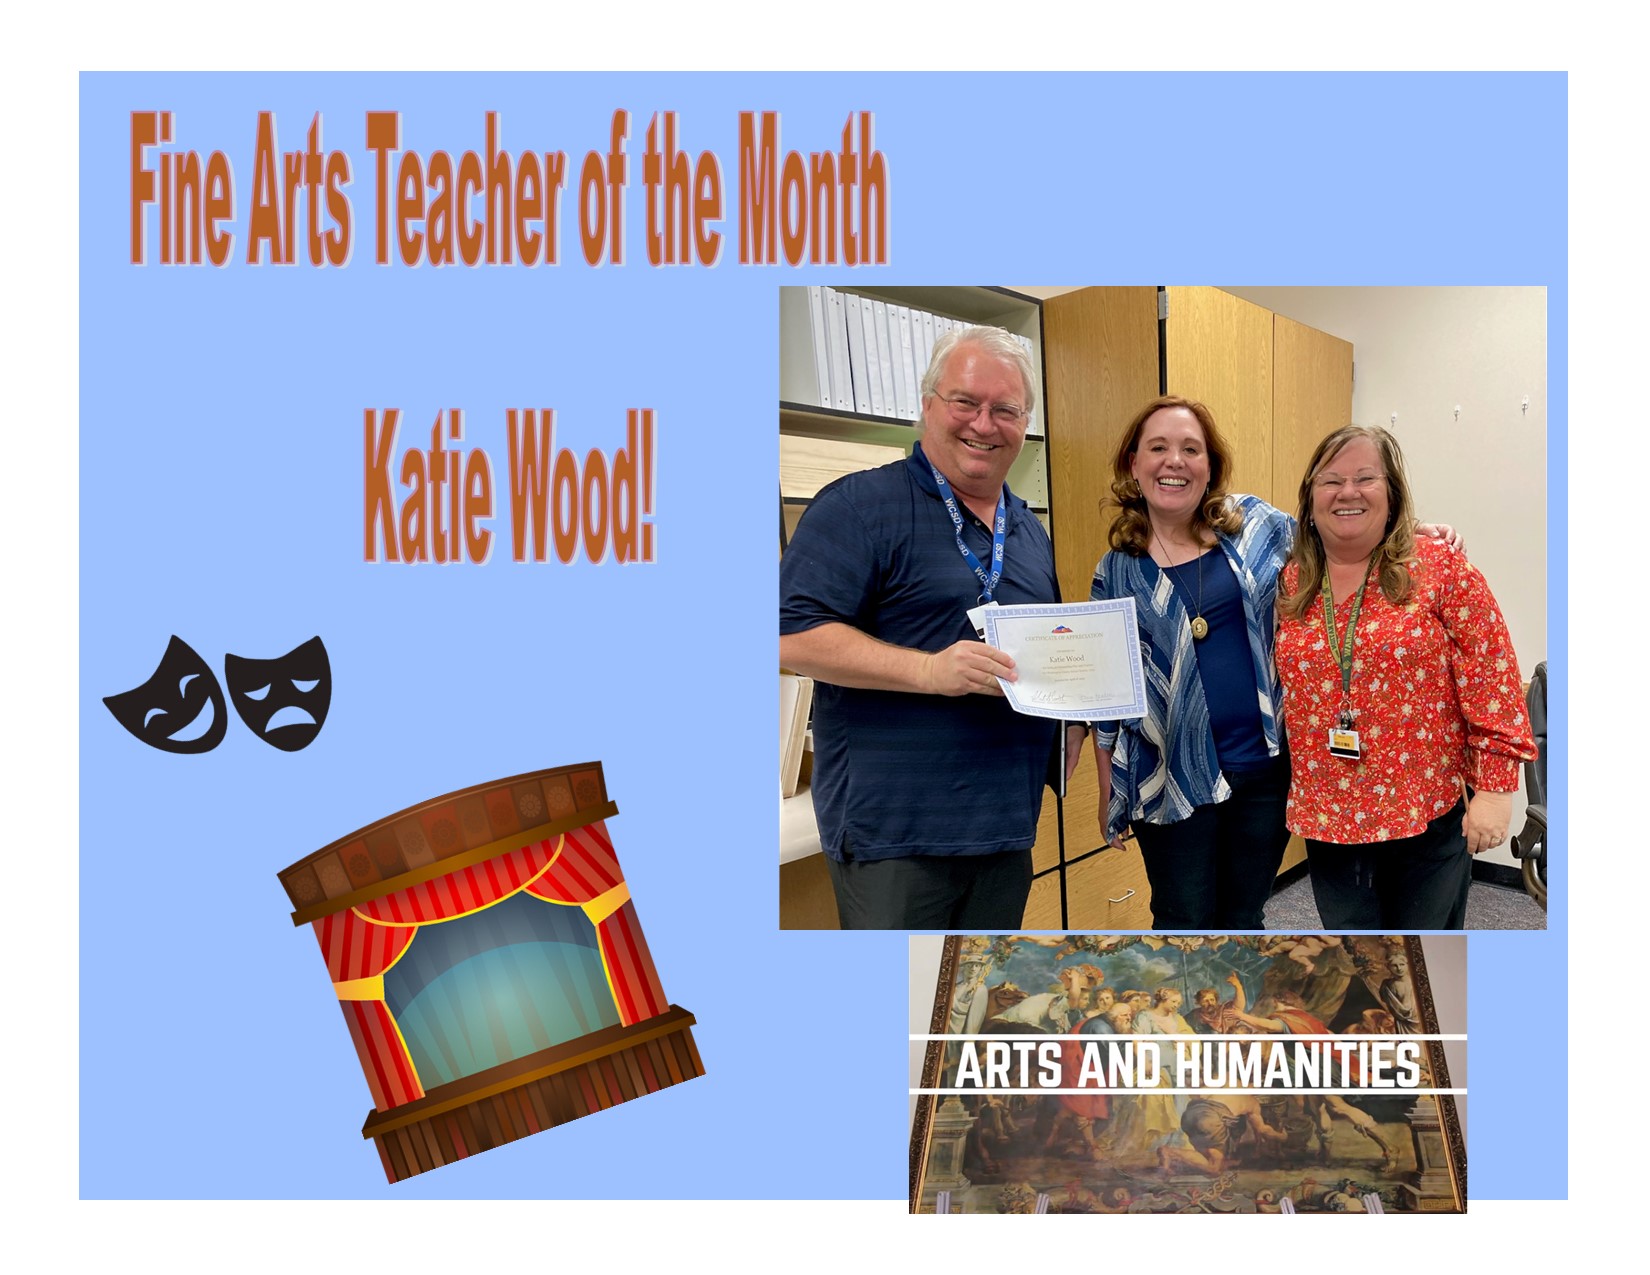 Katie Wood Teacher of the month